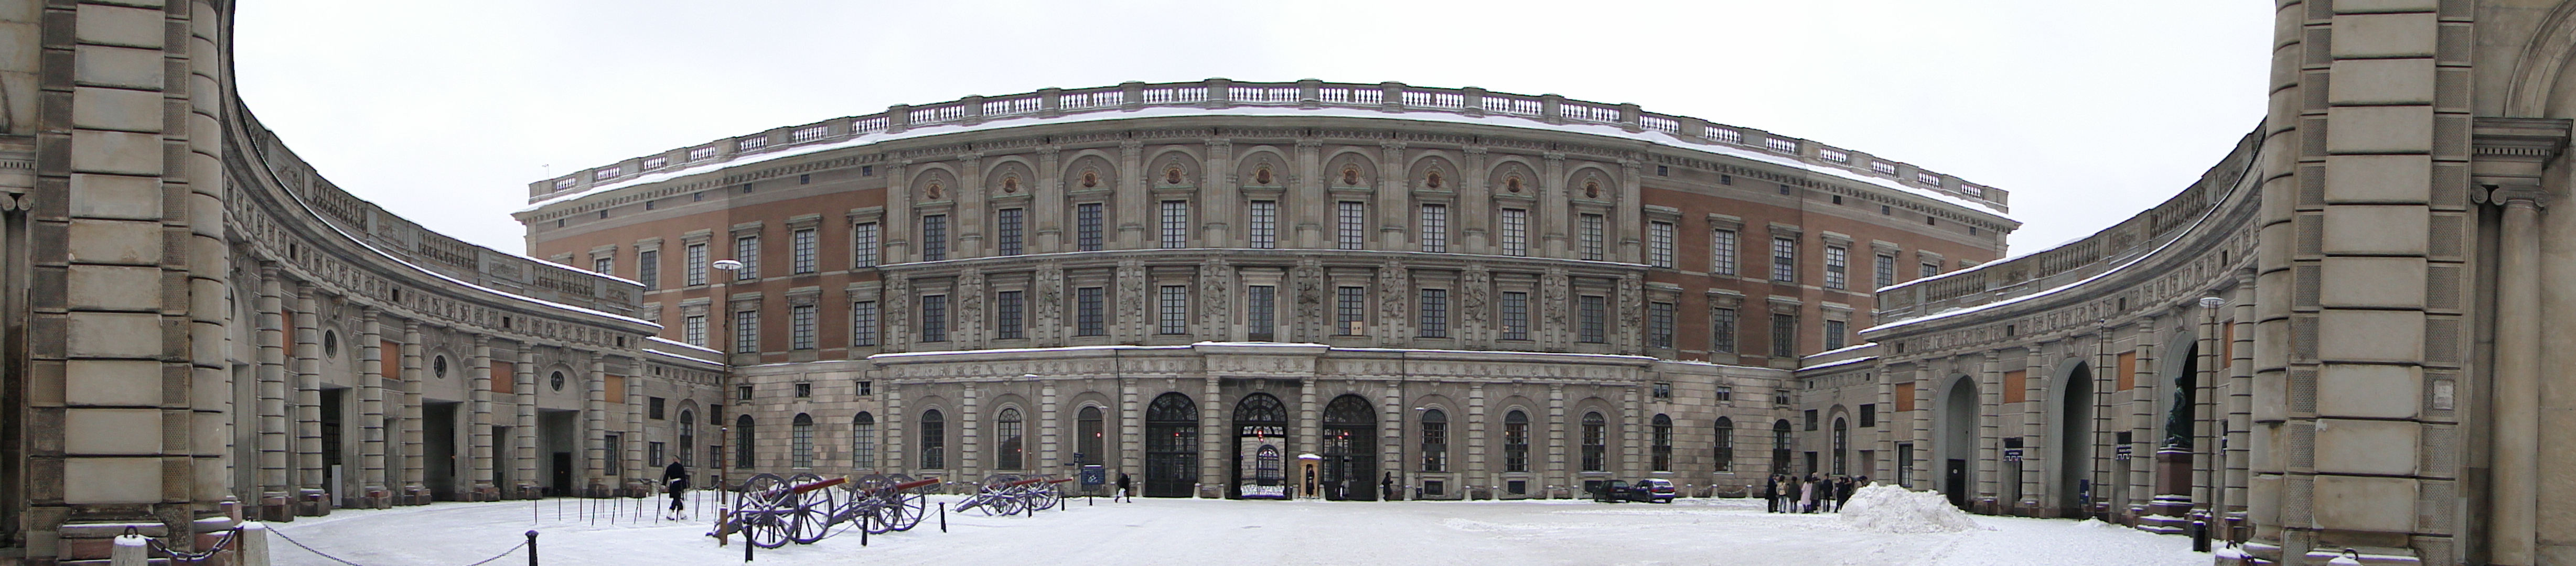 Stockholm Palace #5